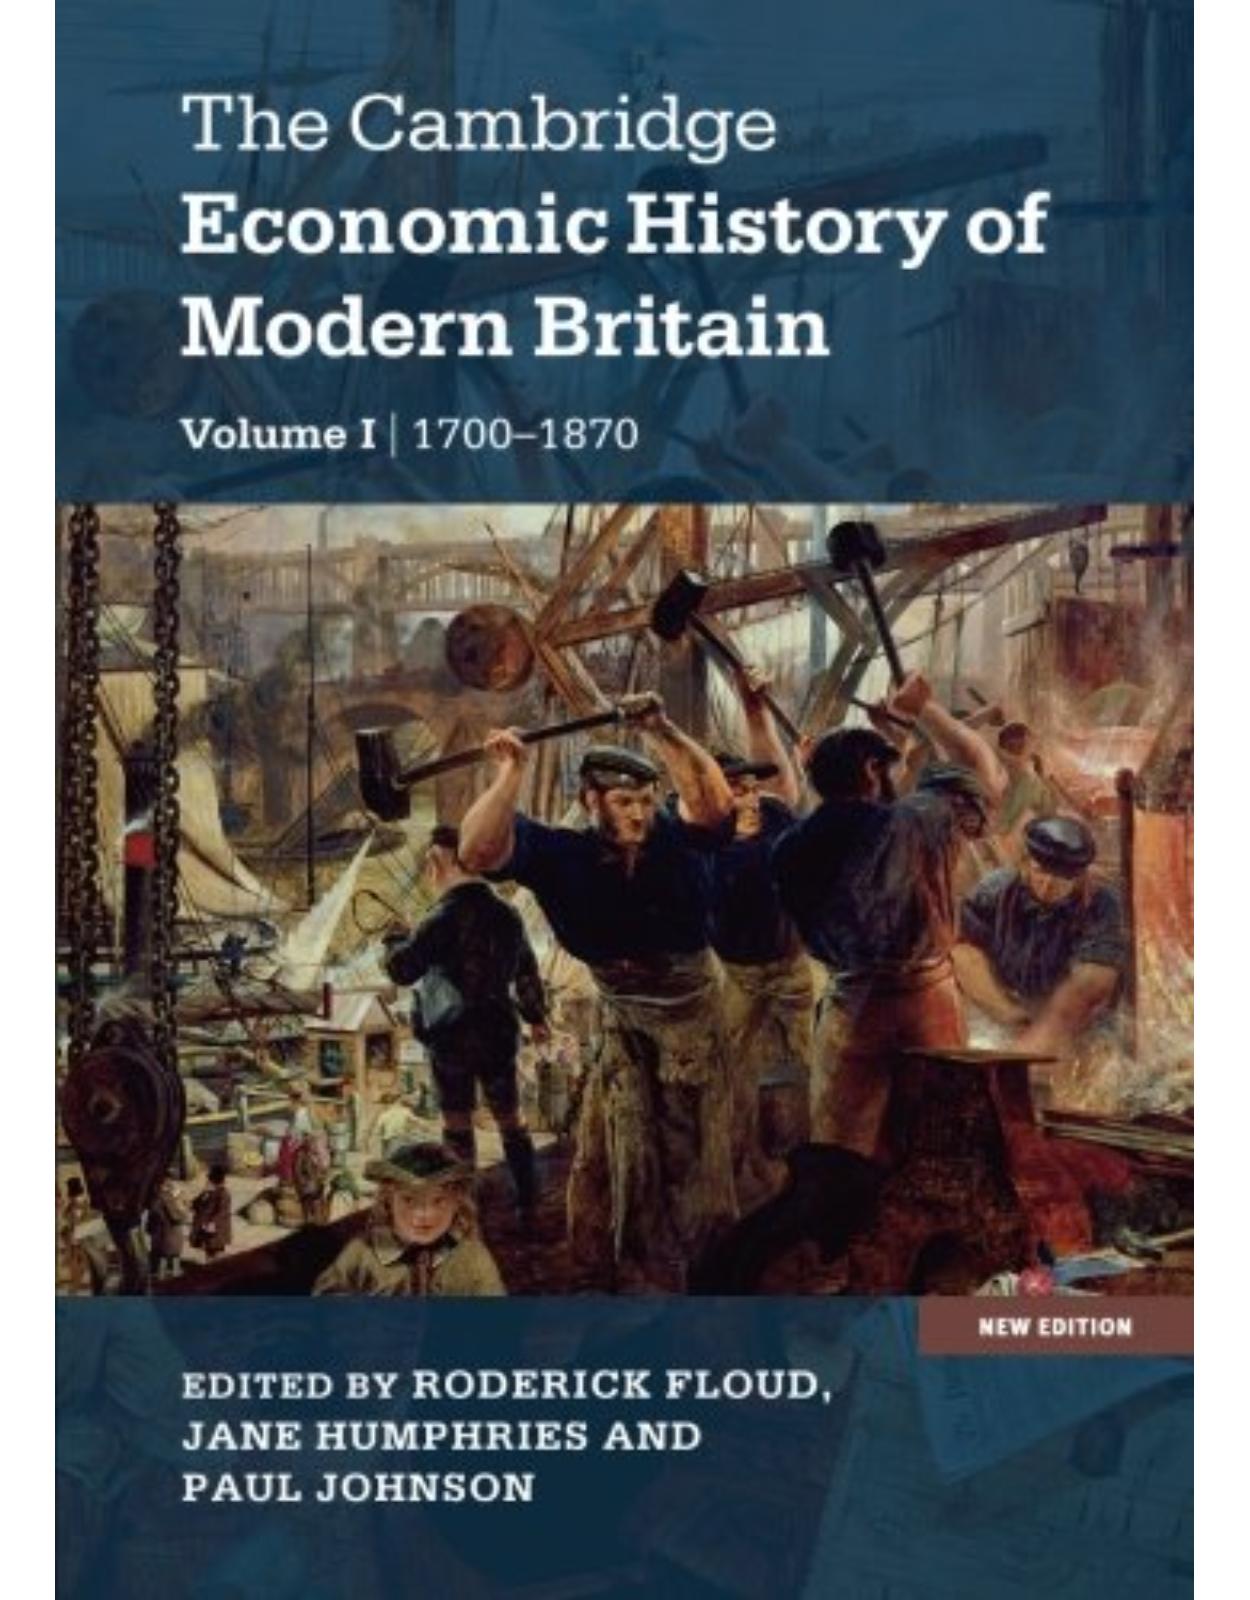 The Cambridge Economic History of Modern Britain: Volume 1